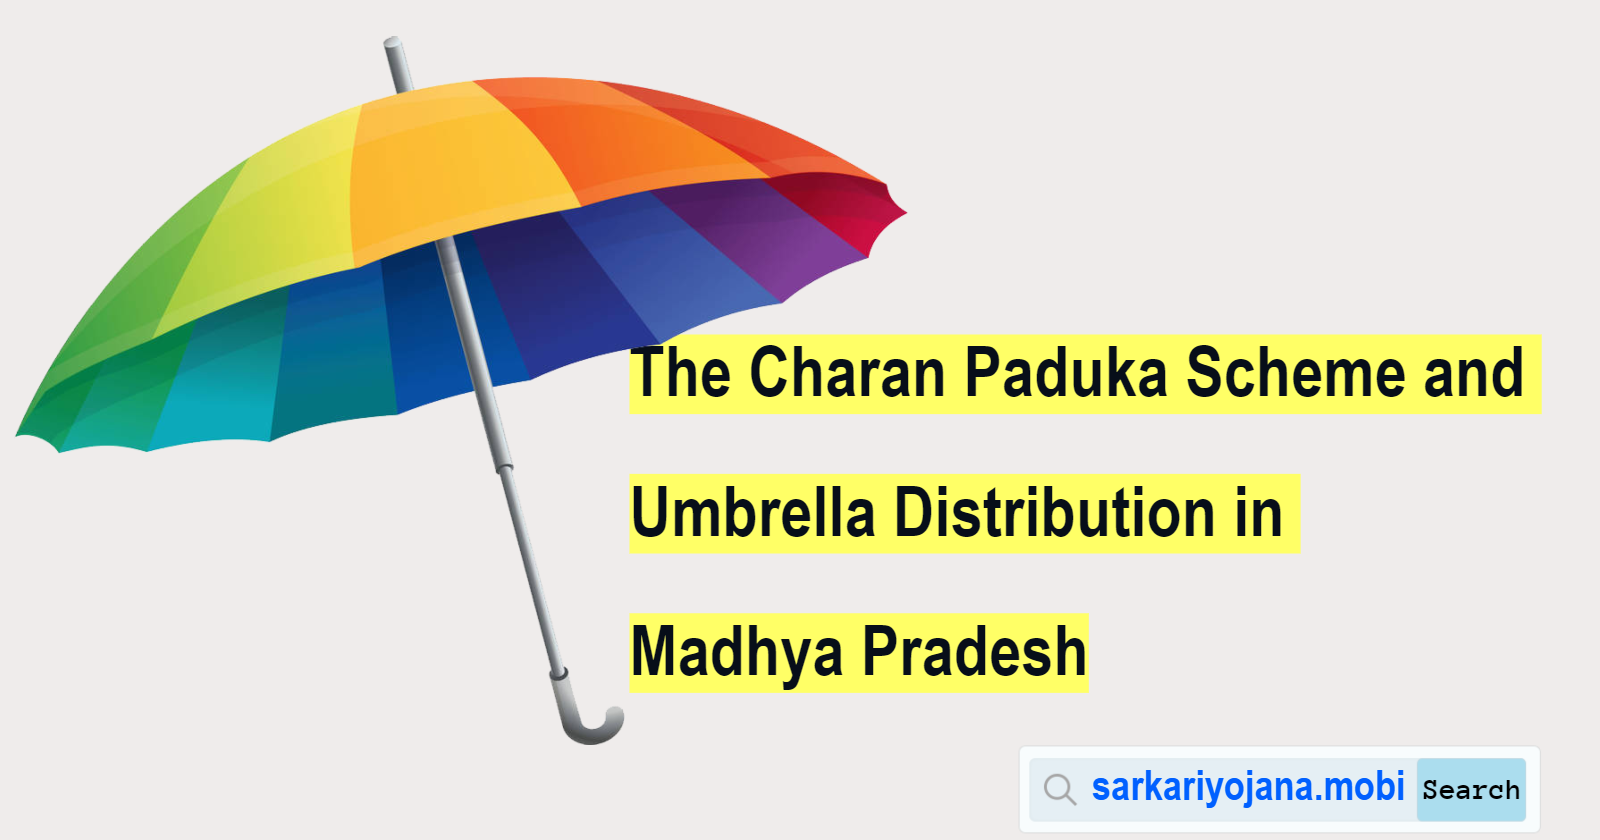 The Charan Paduka Scheme and Umbrella Distribution in Madhya Pradesh